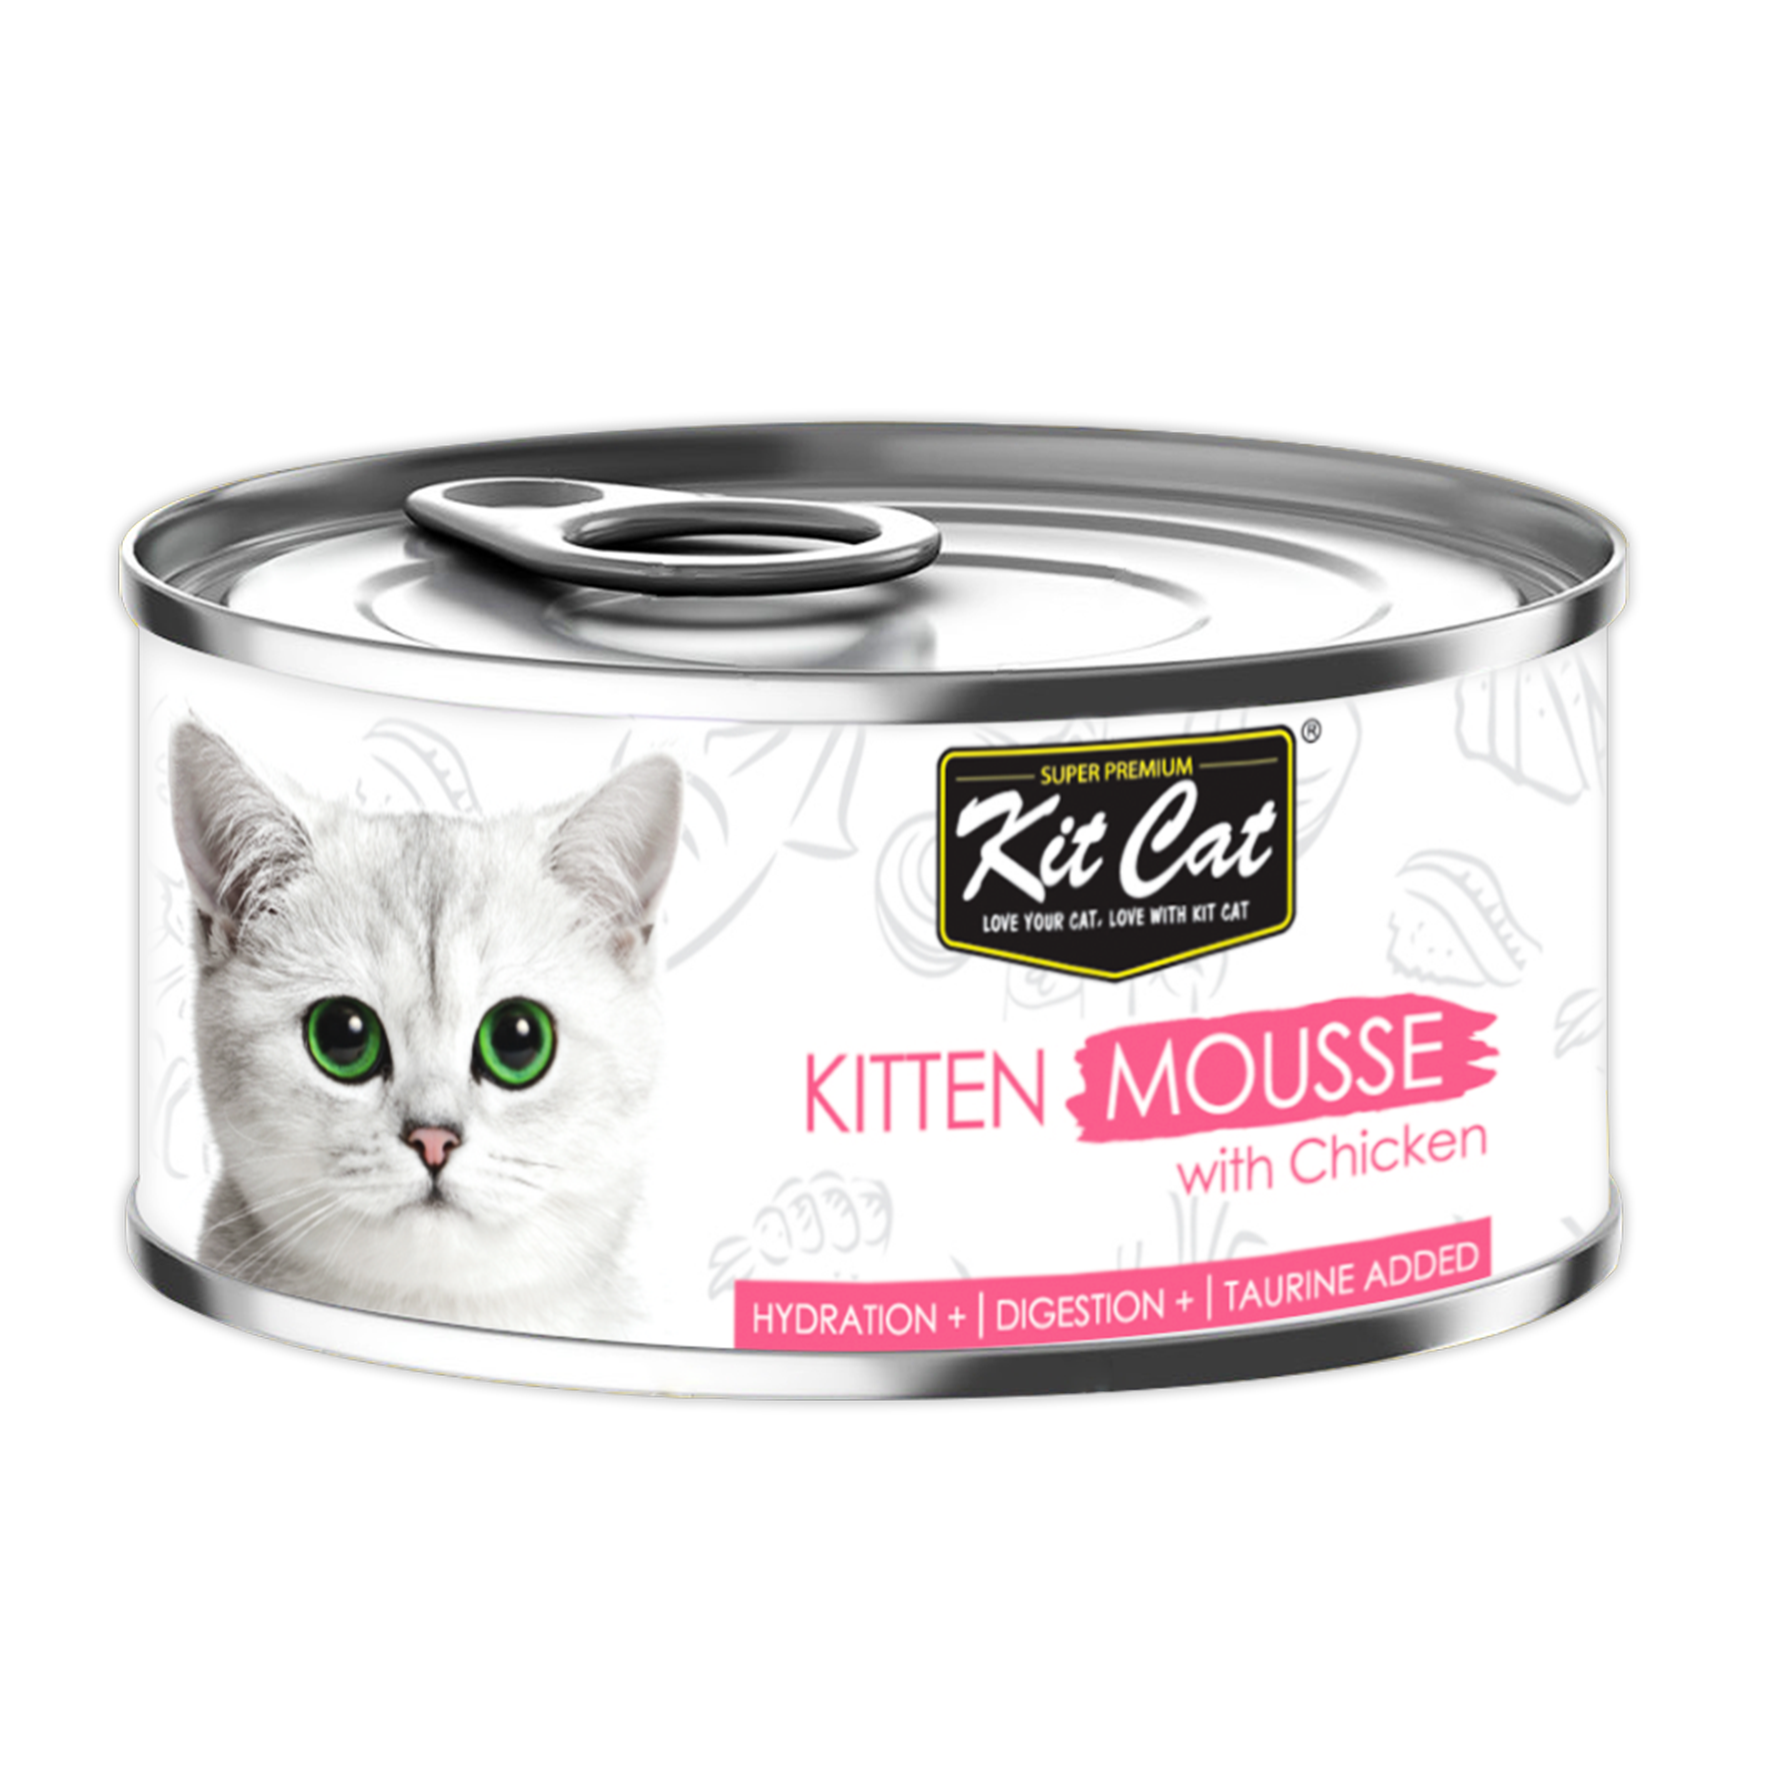 Kit Cat - Kitten Chicken Mousse | Wet Cat Food Toronto